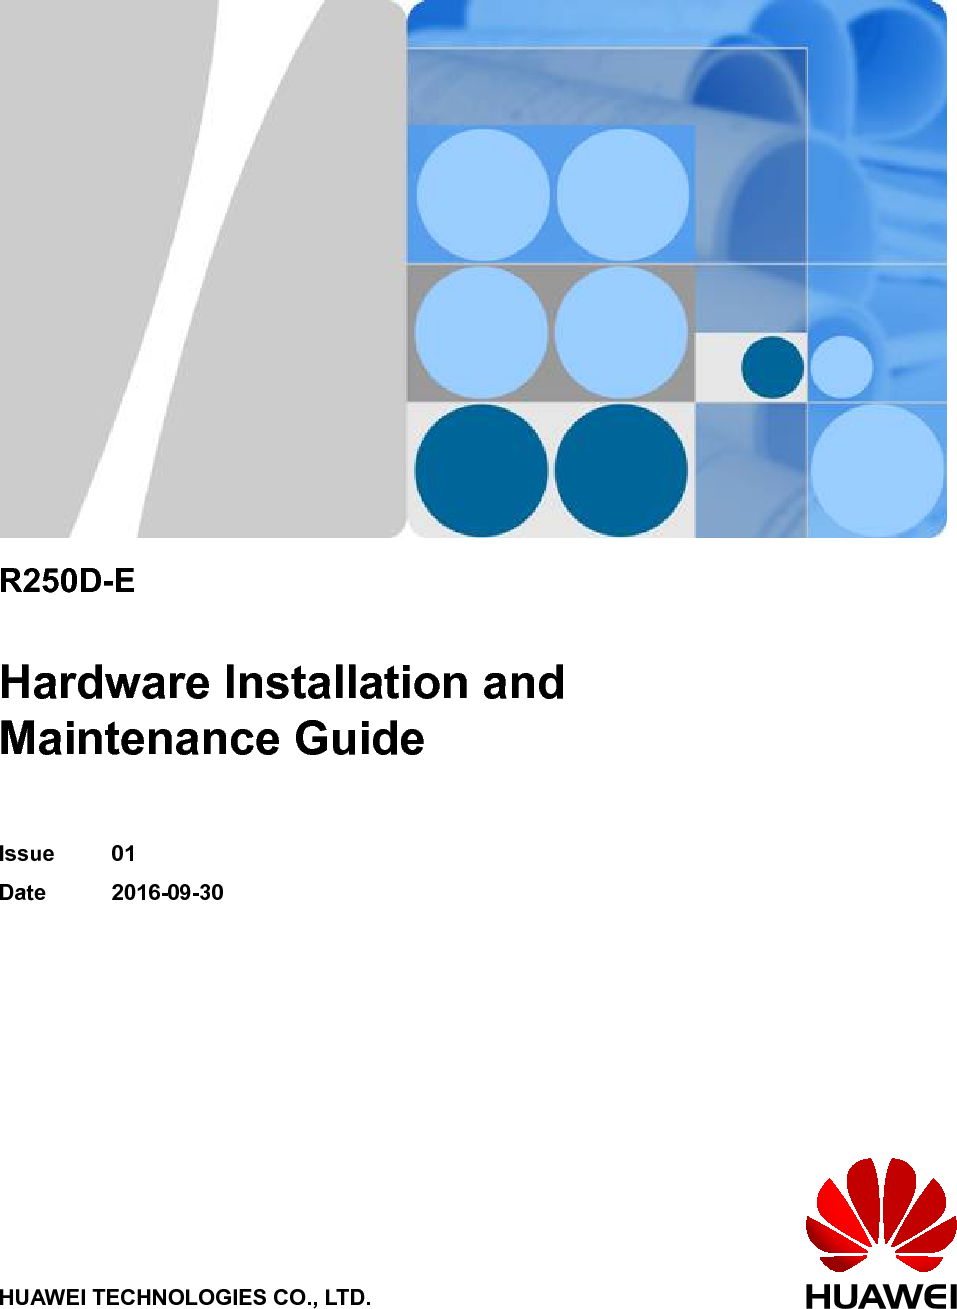 R250D-EHardware Installation andMaintenance GuideIssue 01Date 2016-09-30HUAWEI TECHNOLOGIES CO., LTD.